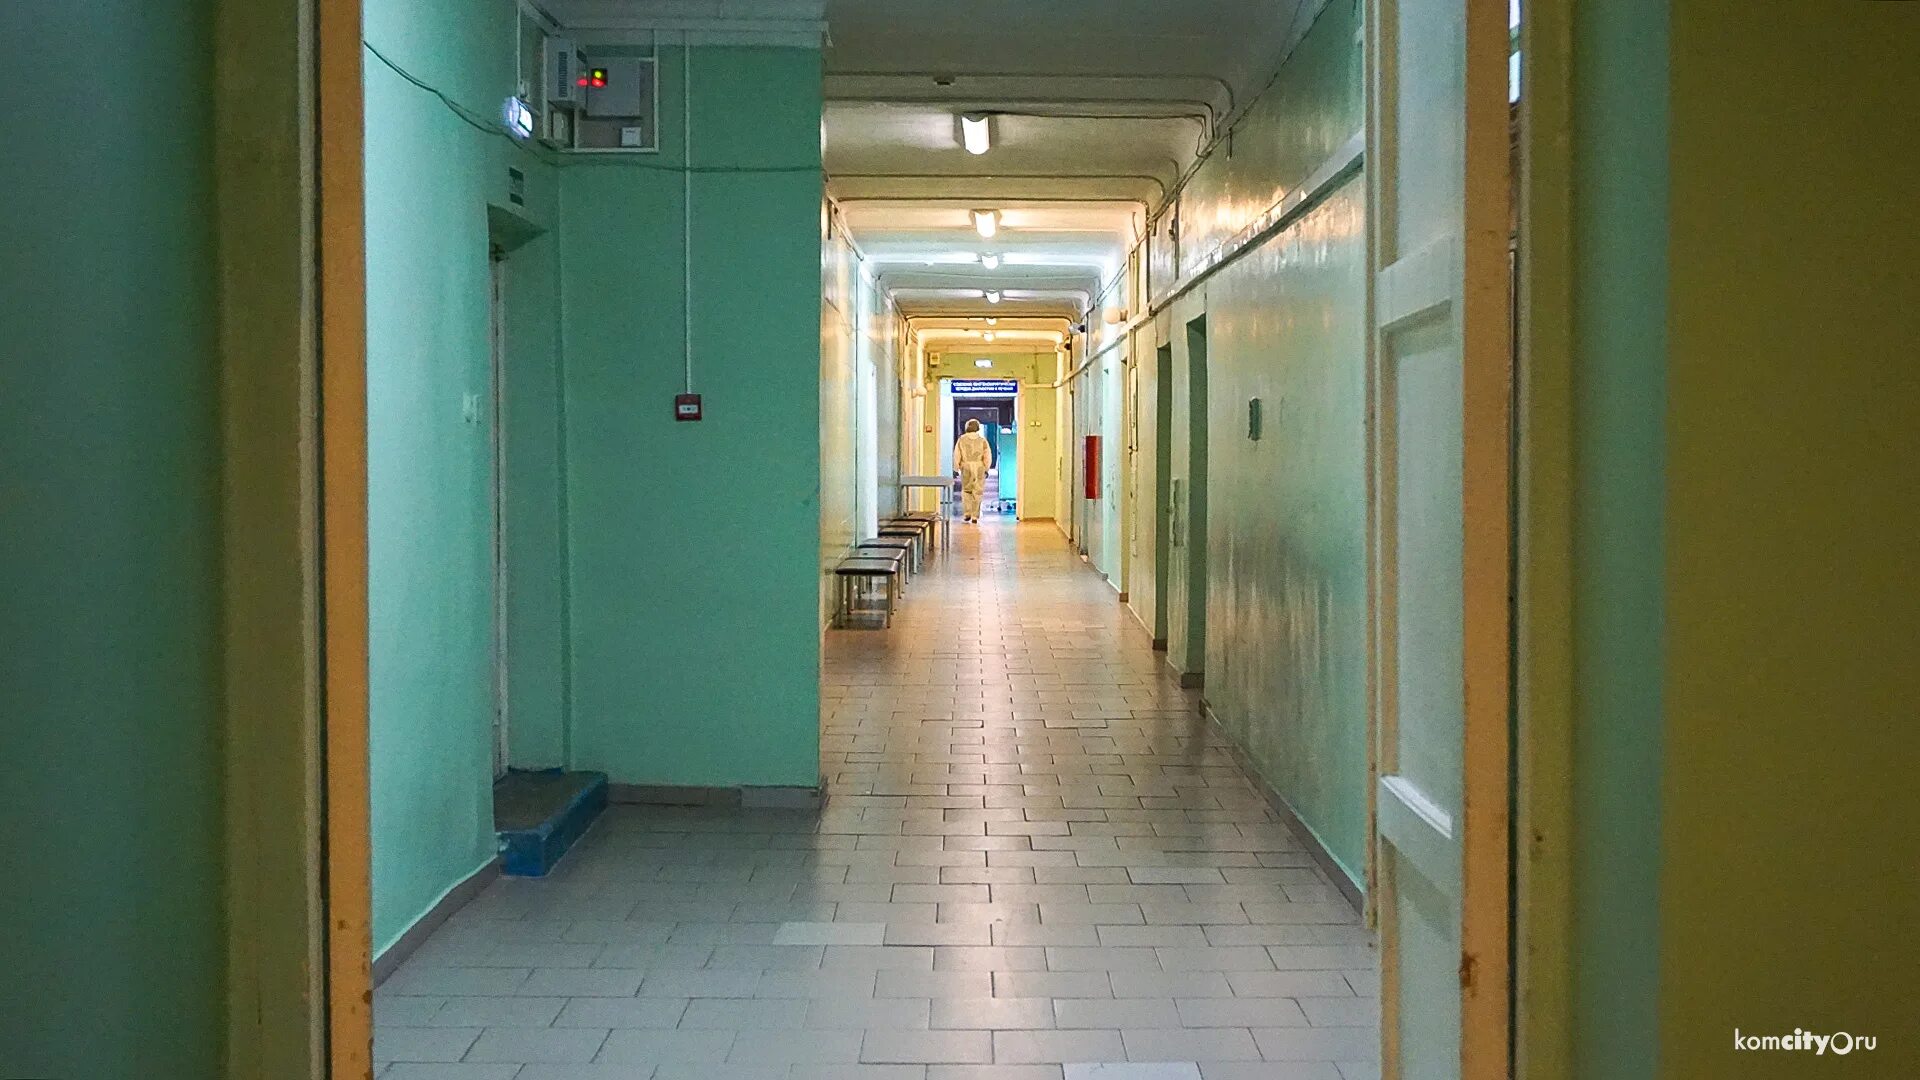 4 больница комсомольск